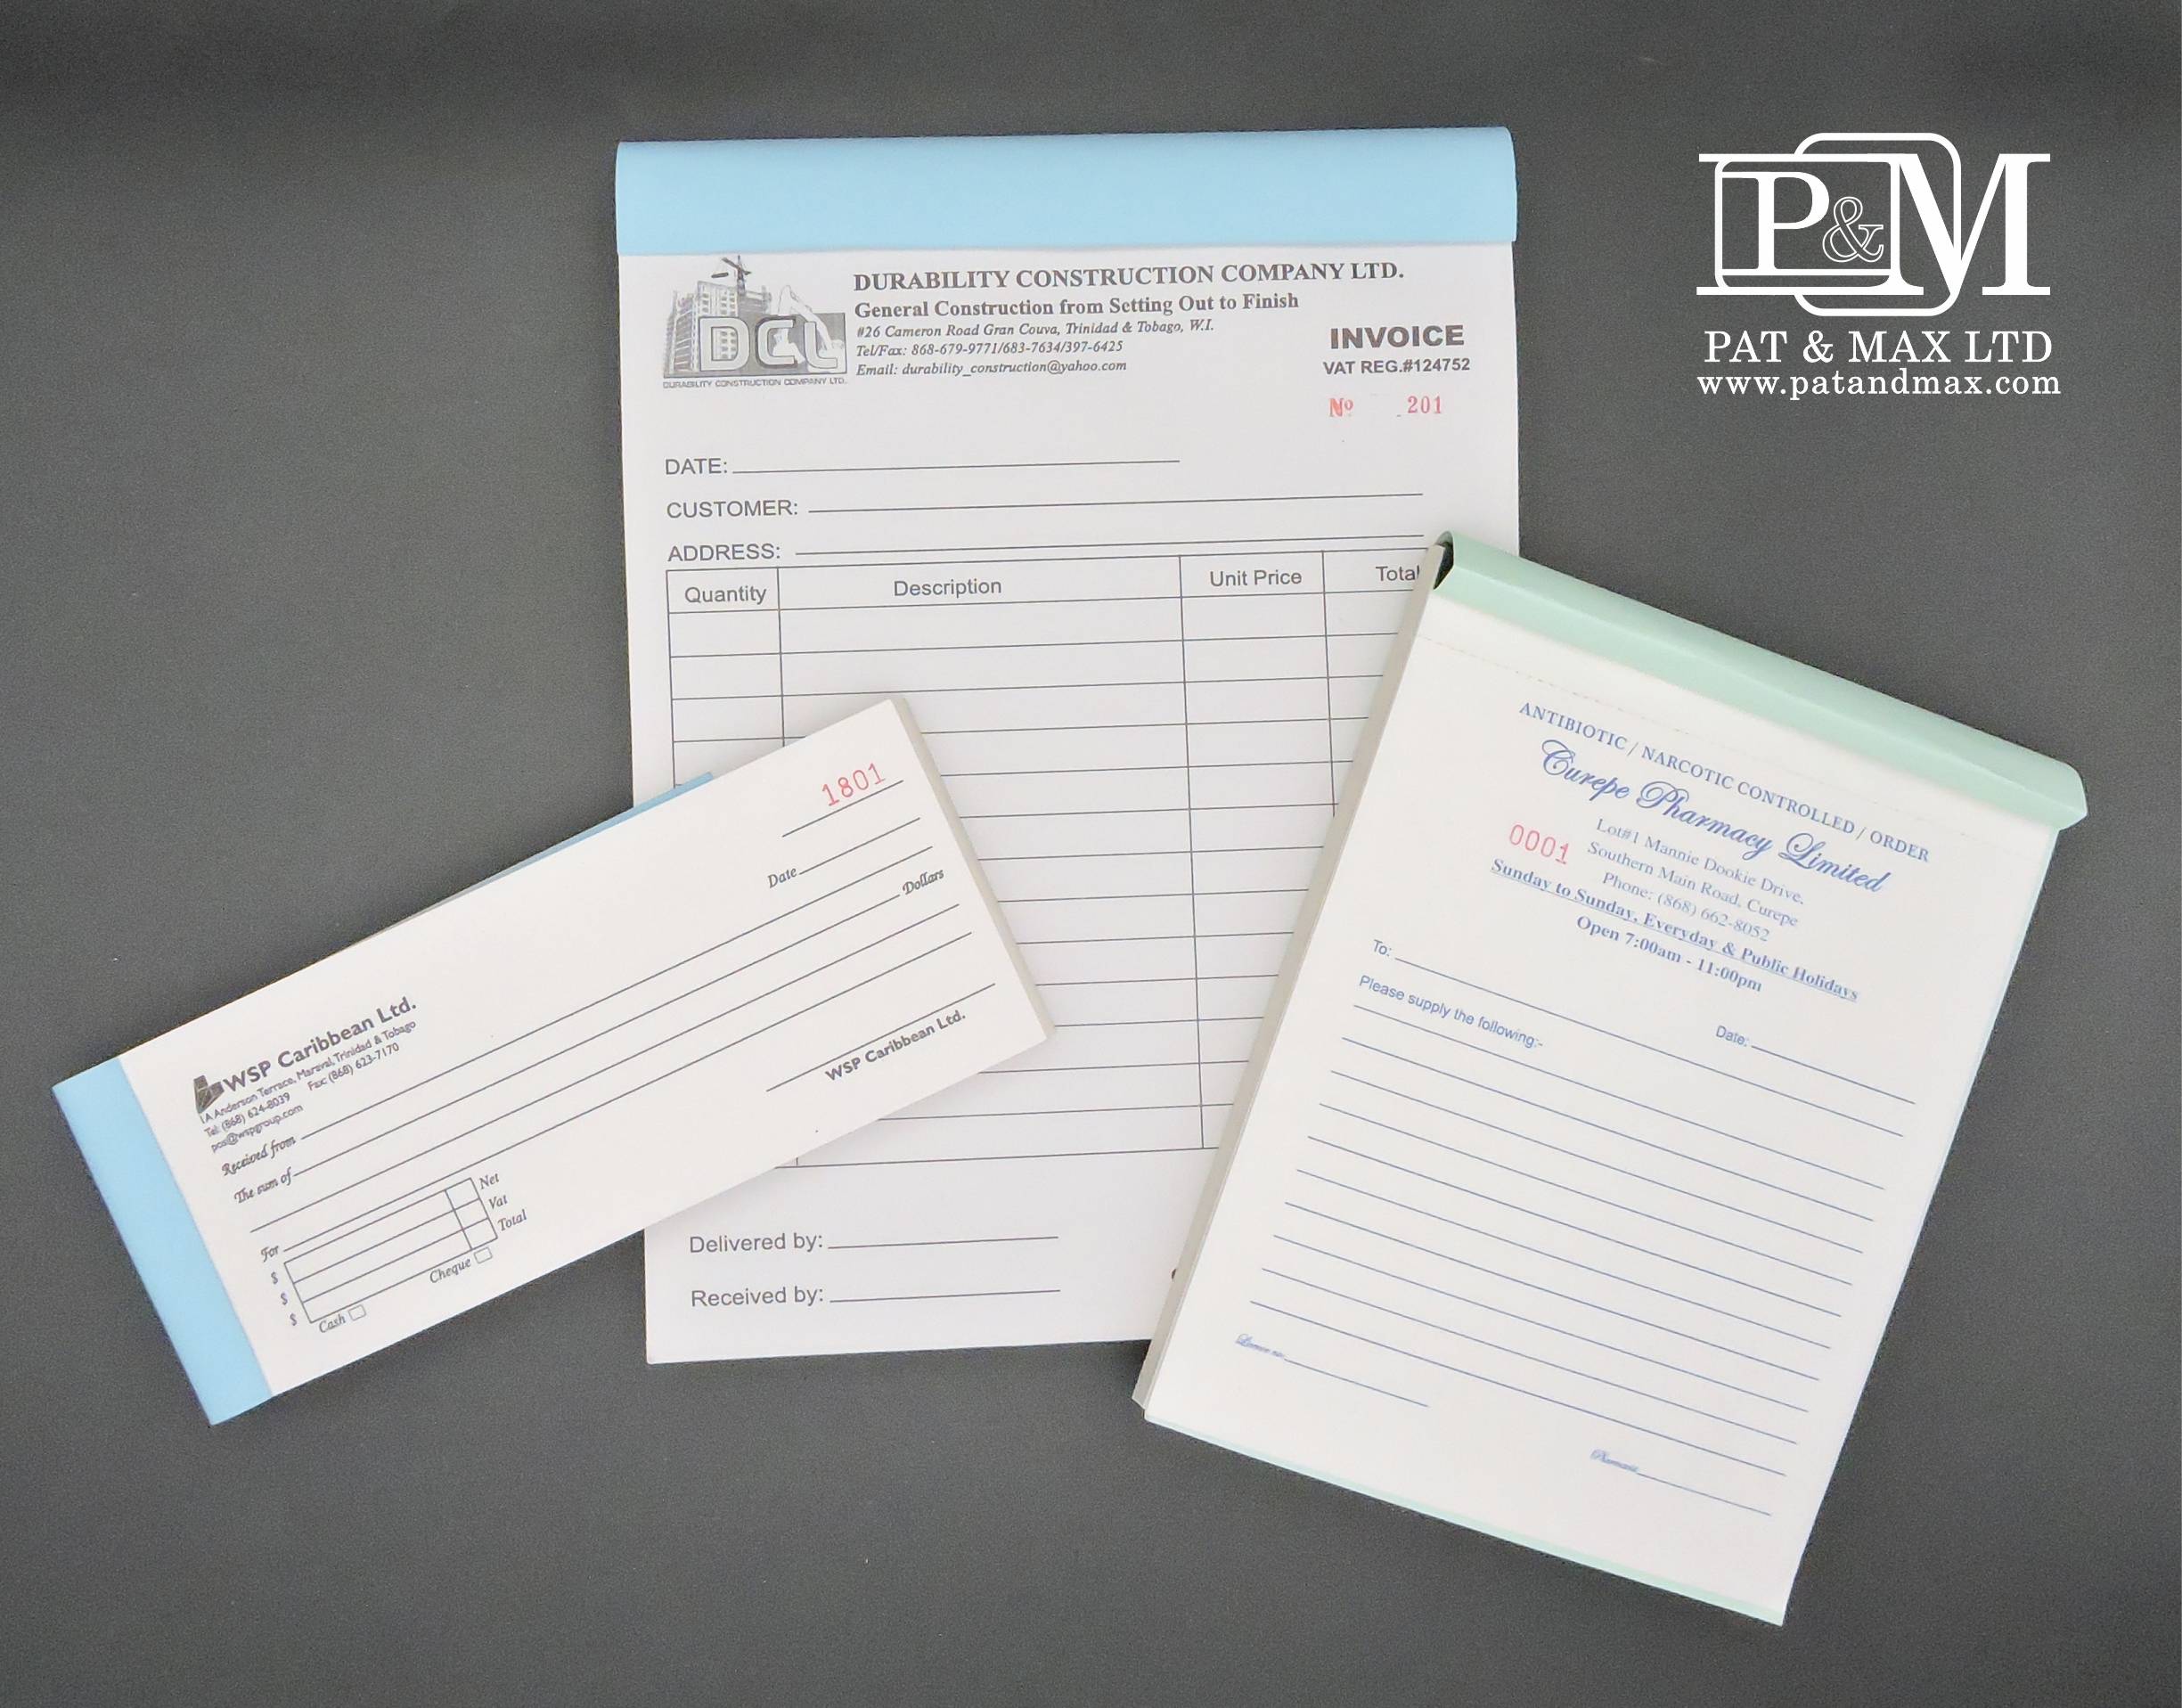 Pat & Max Ltd Plastic & ID Card Systems - LAMINATED PRODUCTS